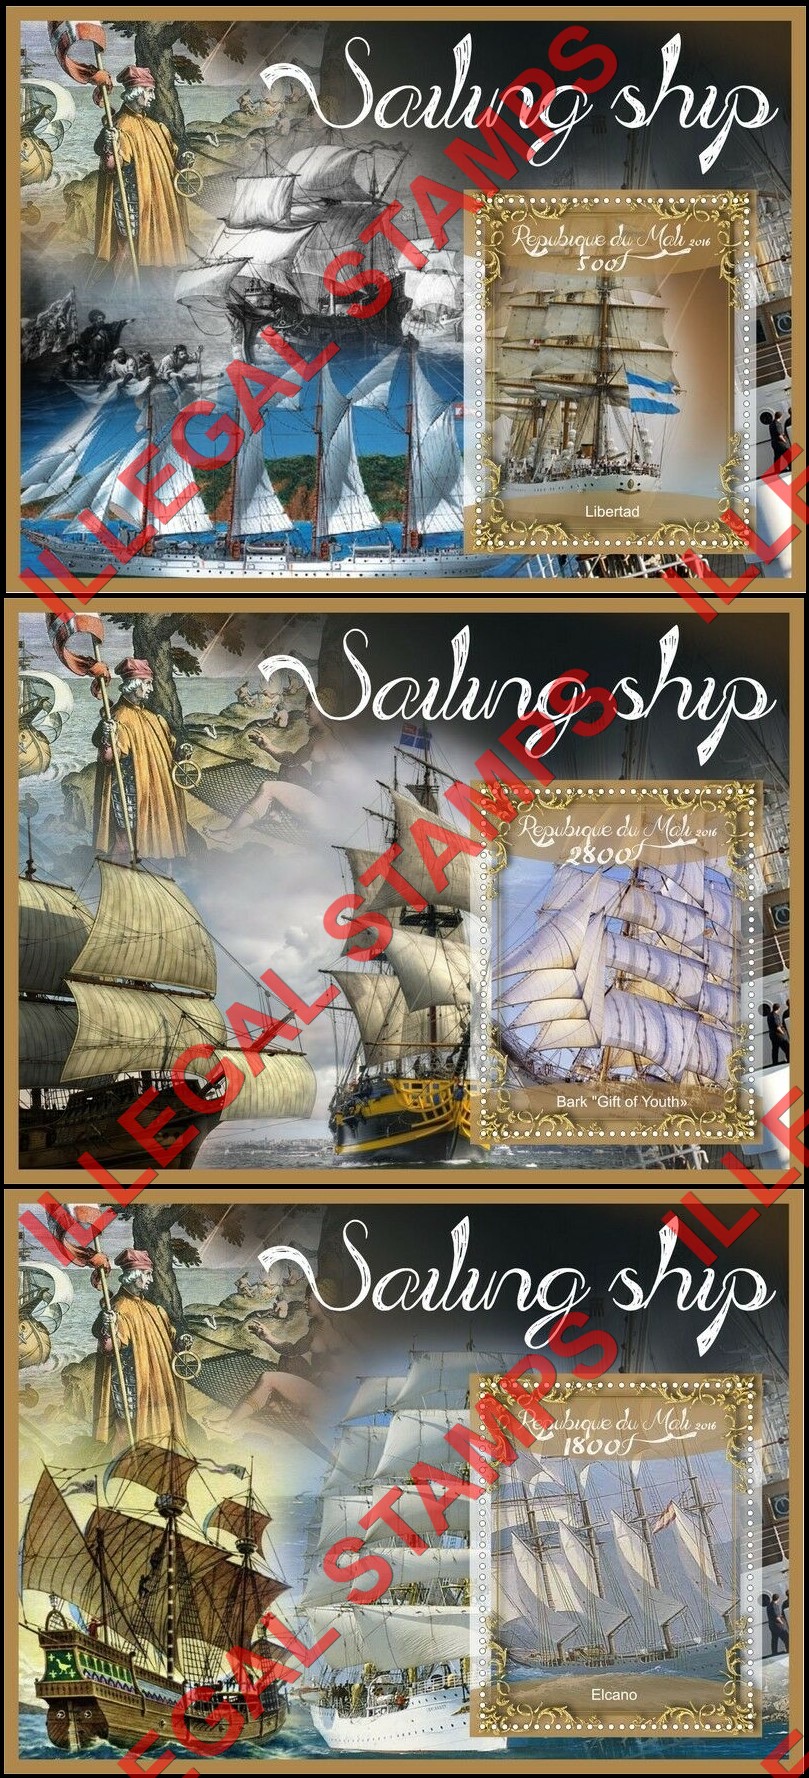 Mali 2016 Sailing Ships Illegal Stamp Souvenir Sheets of 1 (Part 1)